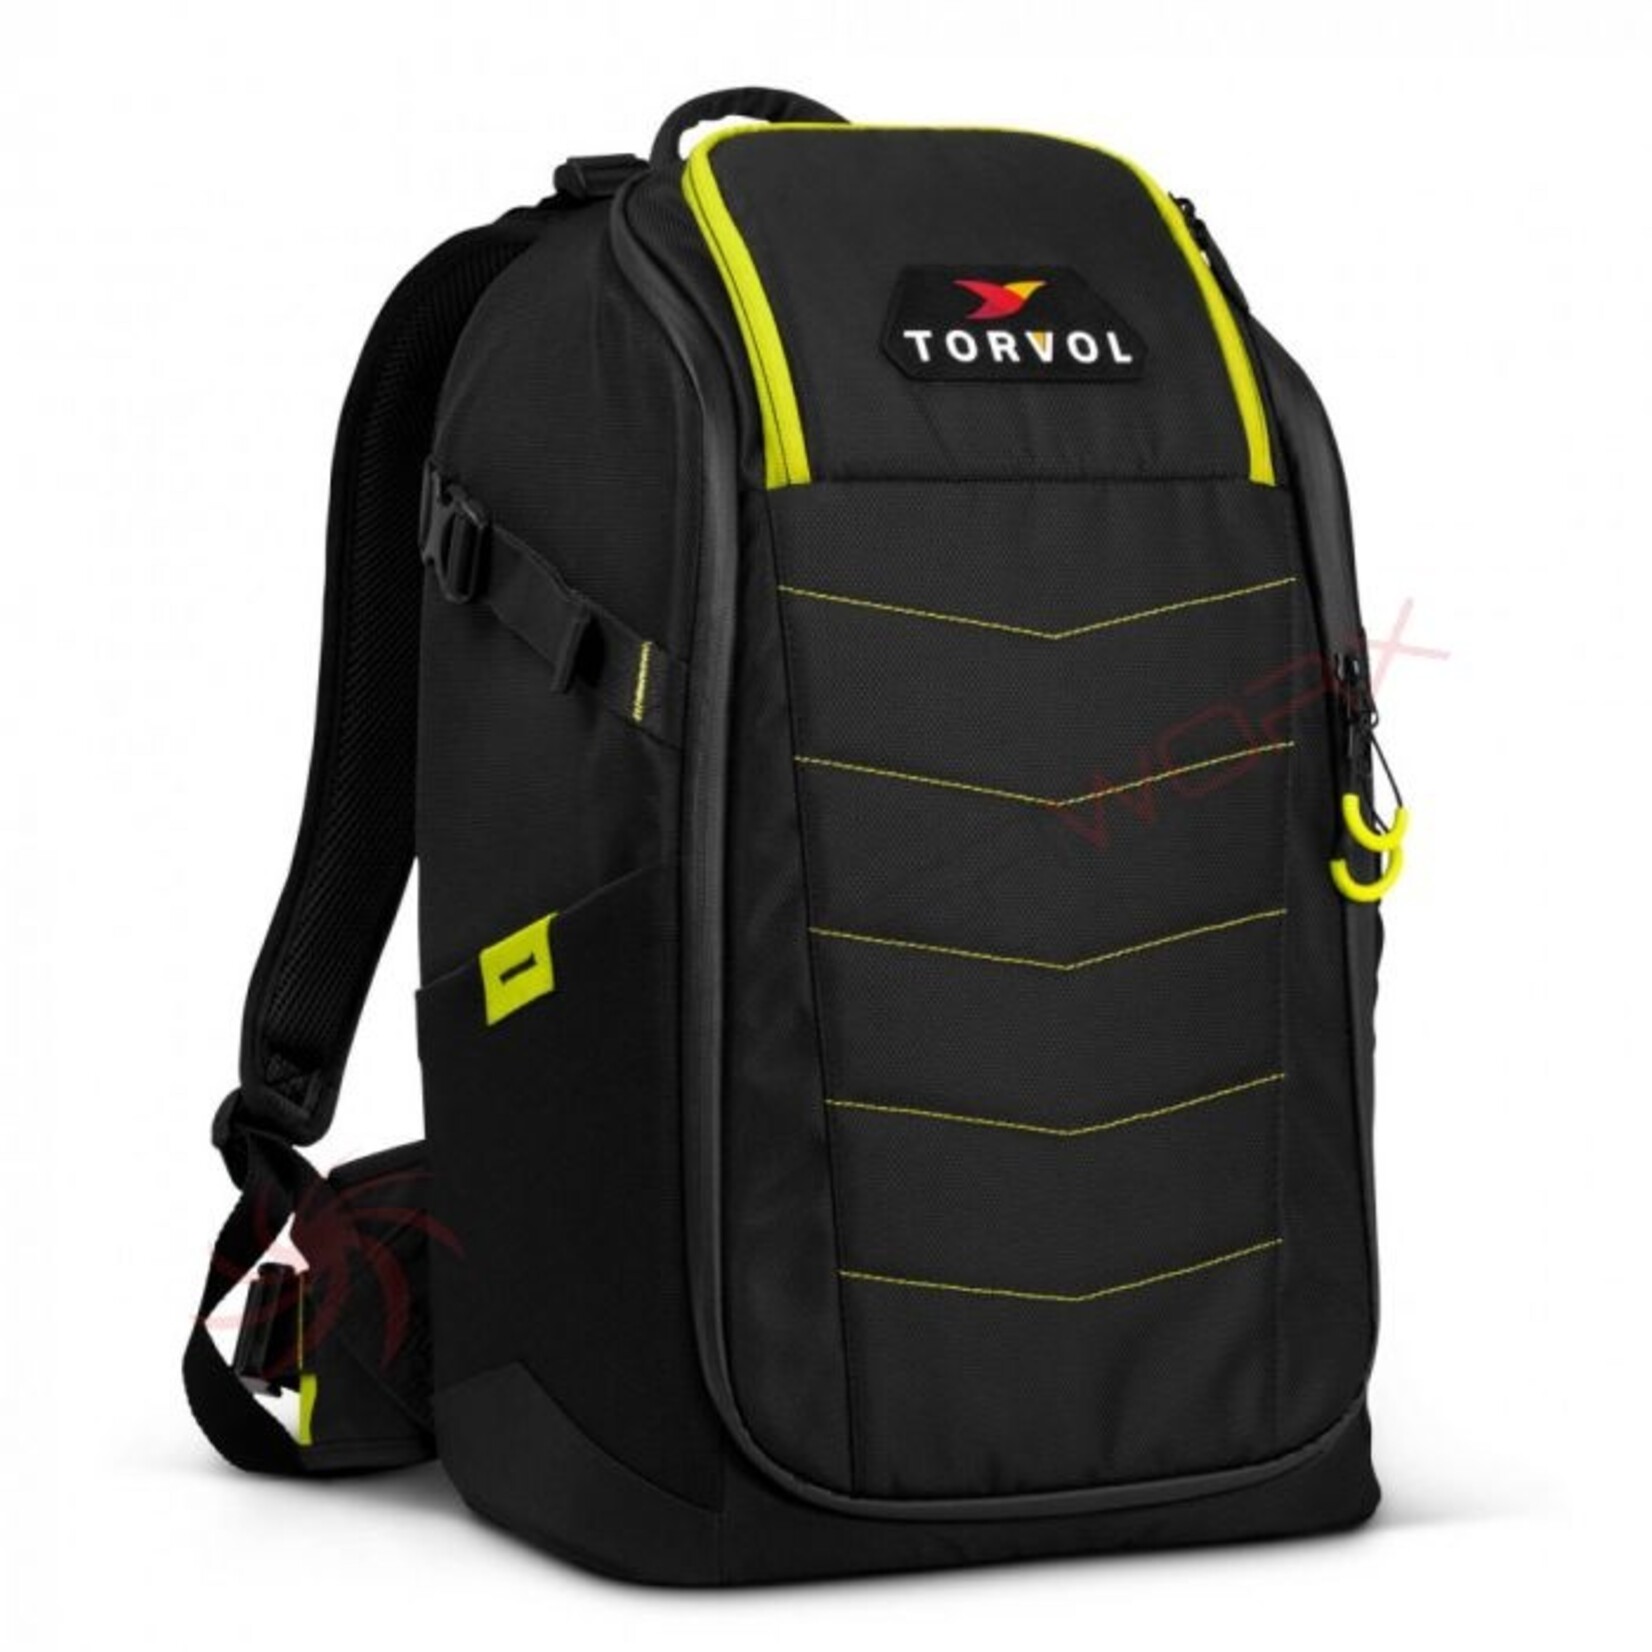 Torvol Torvol Quad Pitstop Backpack (DJI FPV) #TO-001